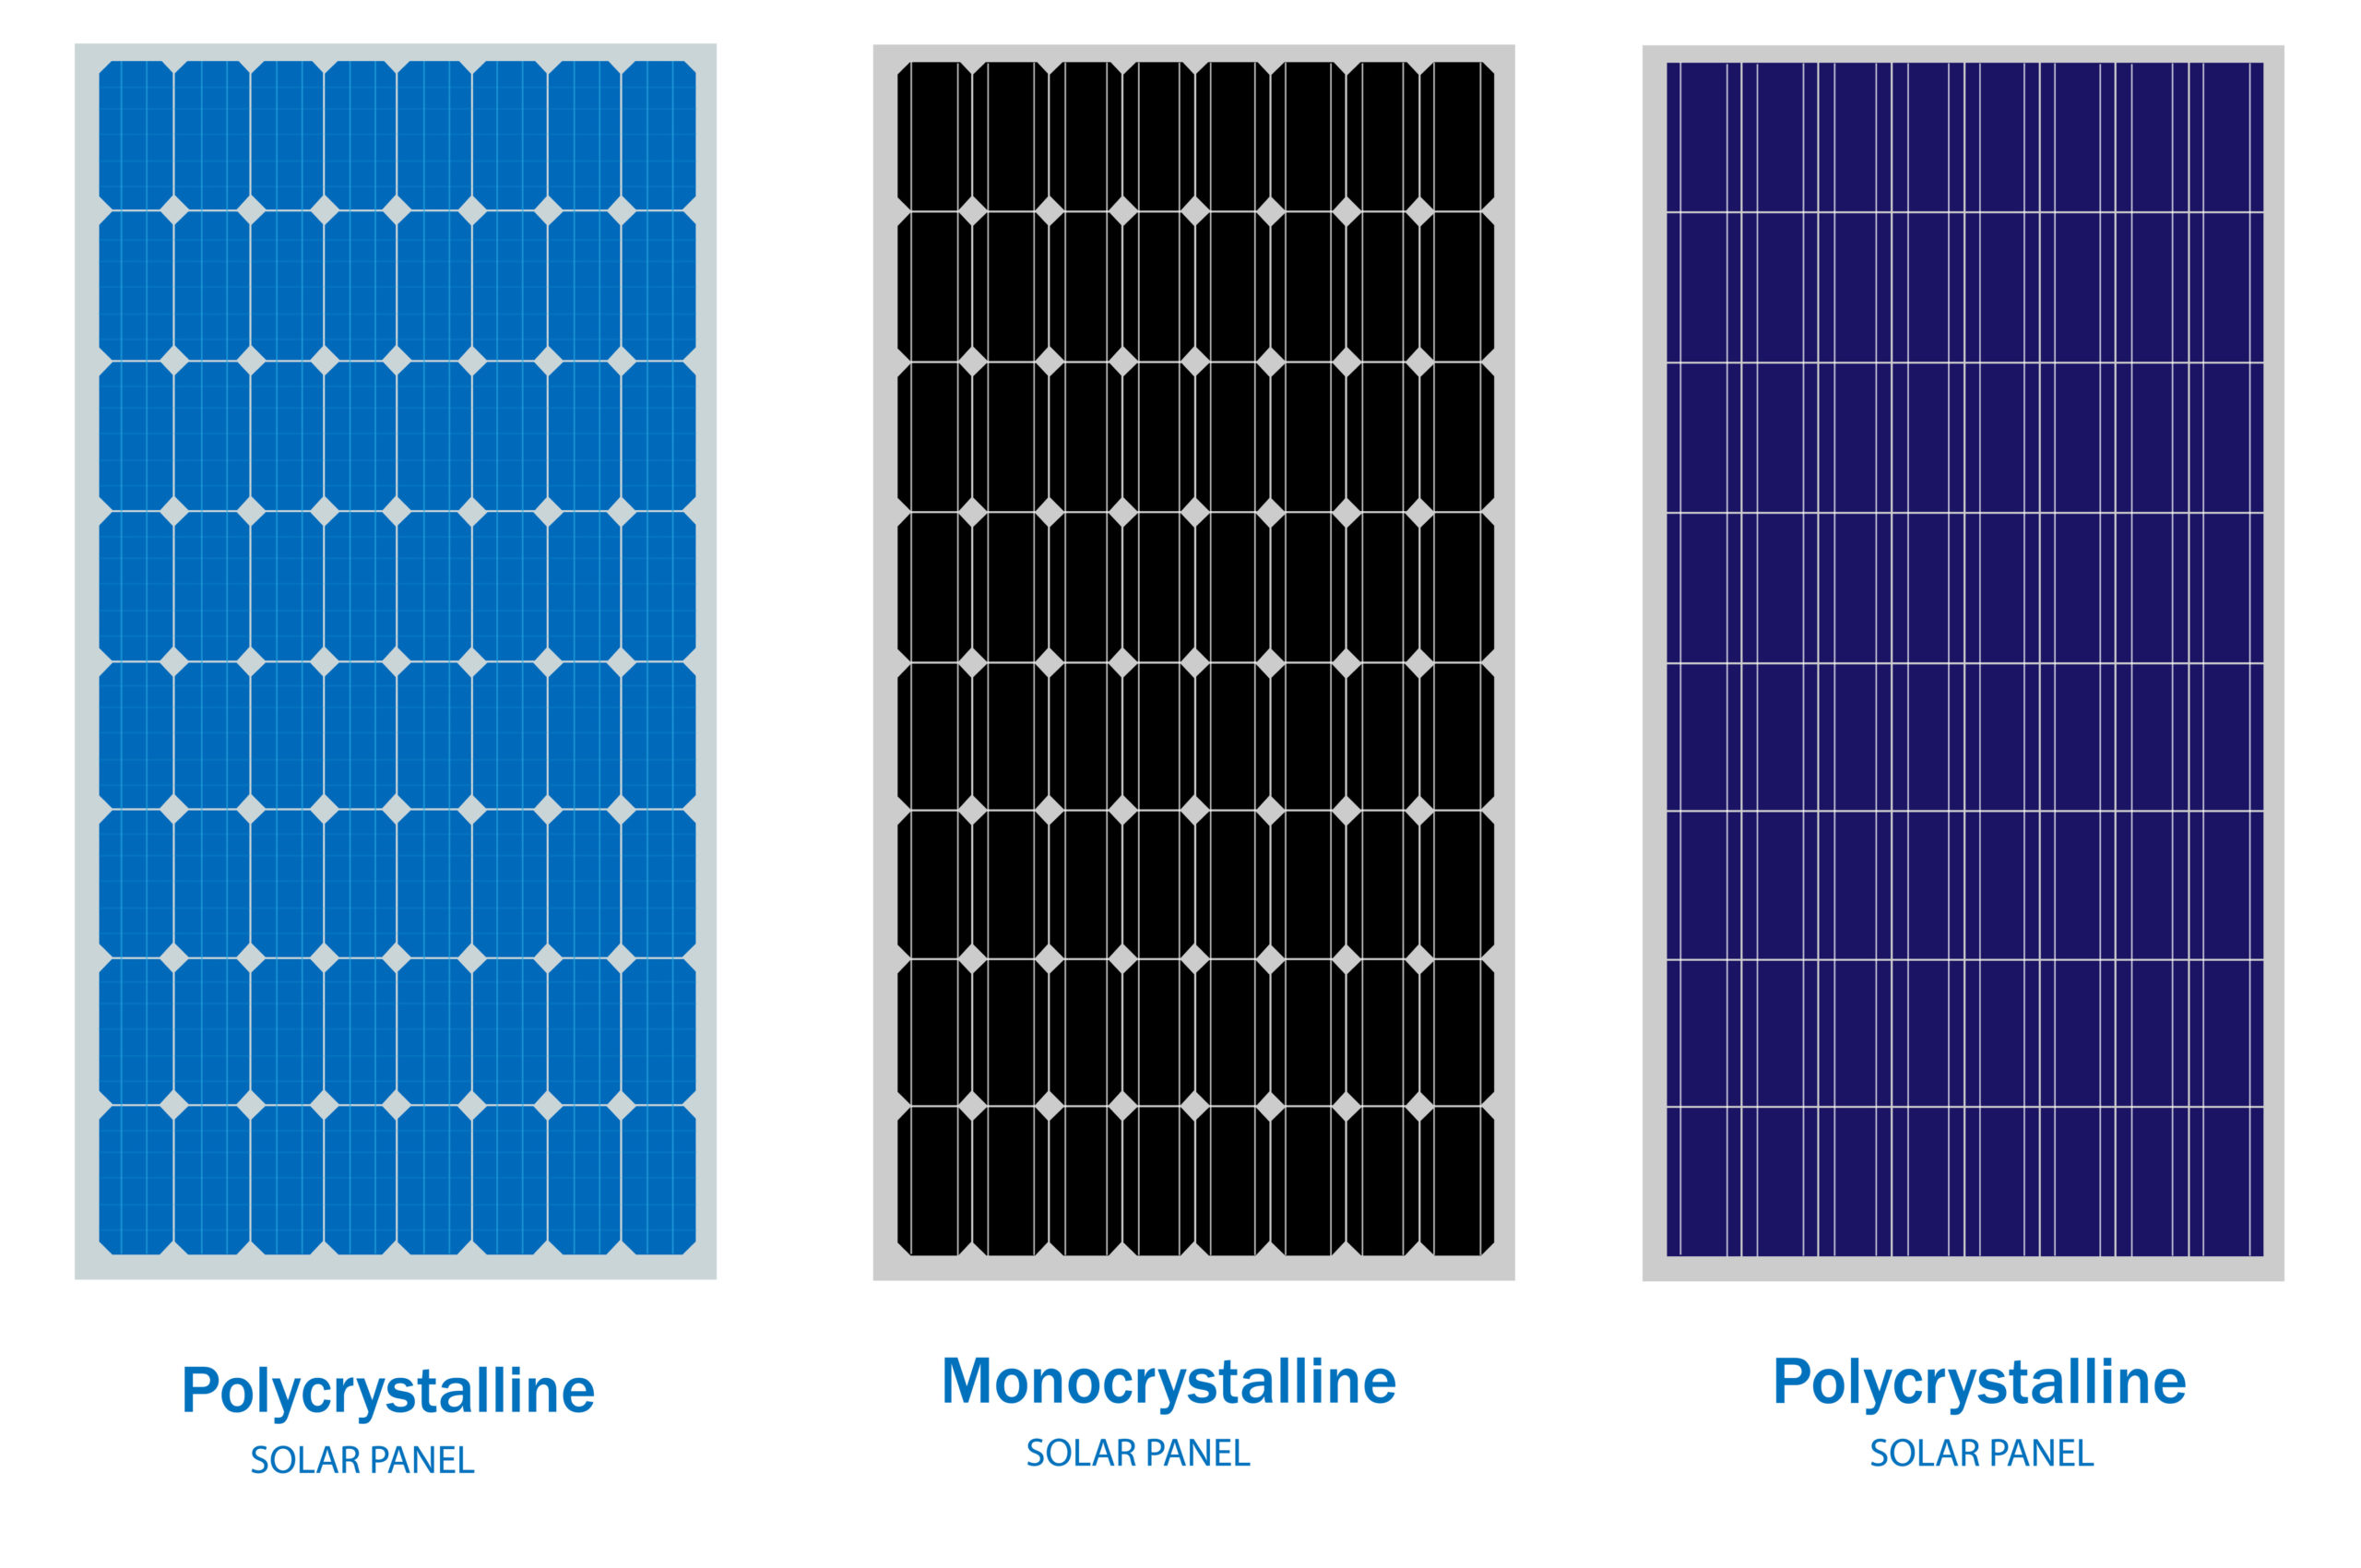 Solarmodule im Vergleich